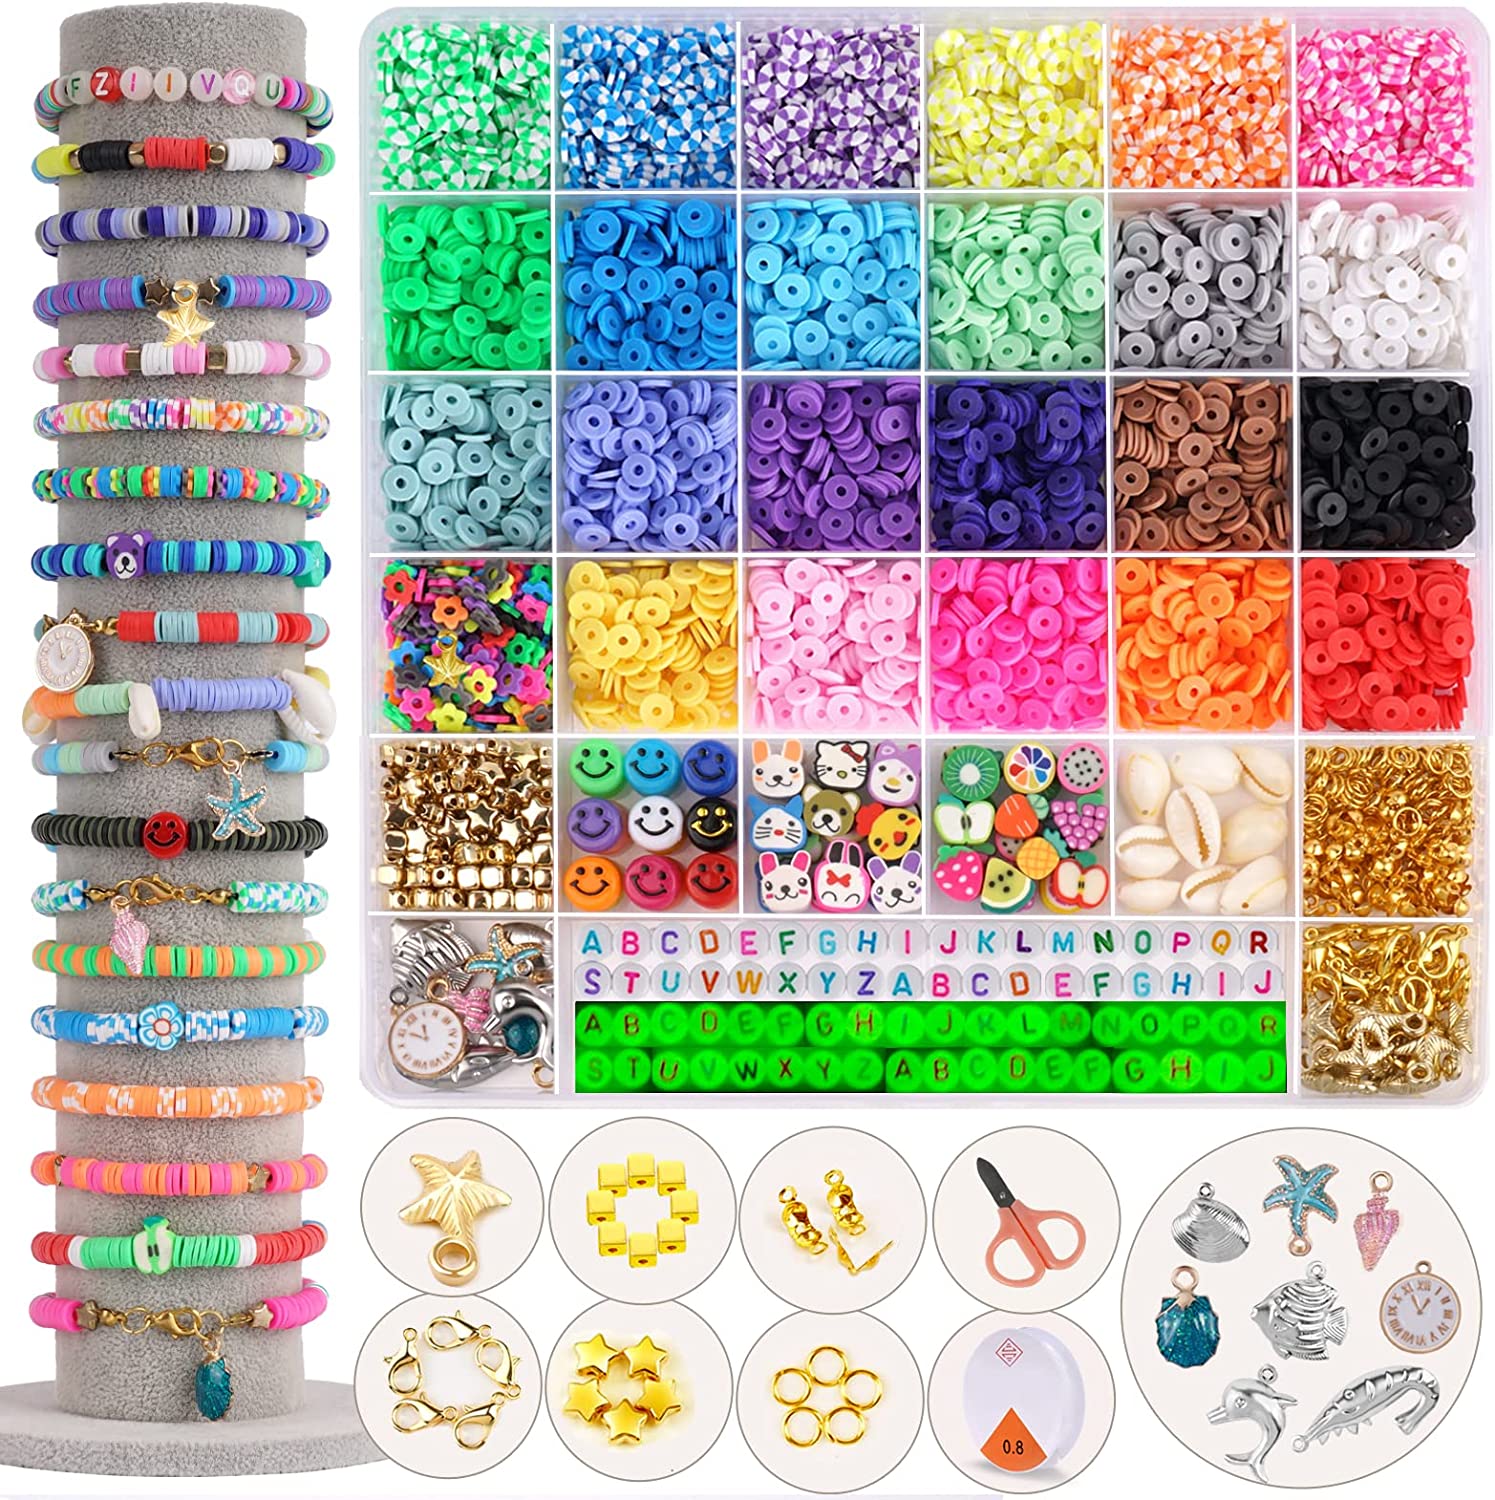 6100 Pcs Clay Beads Bracelet Making Kit 24 Colors Flat Clay Beads Set Friendship